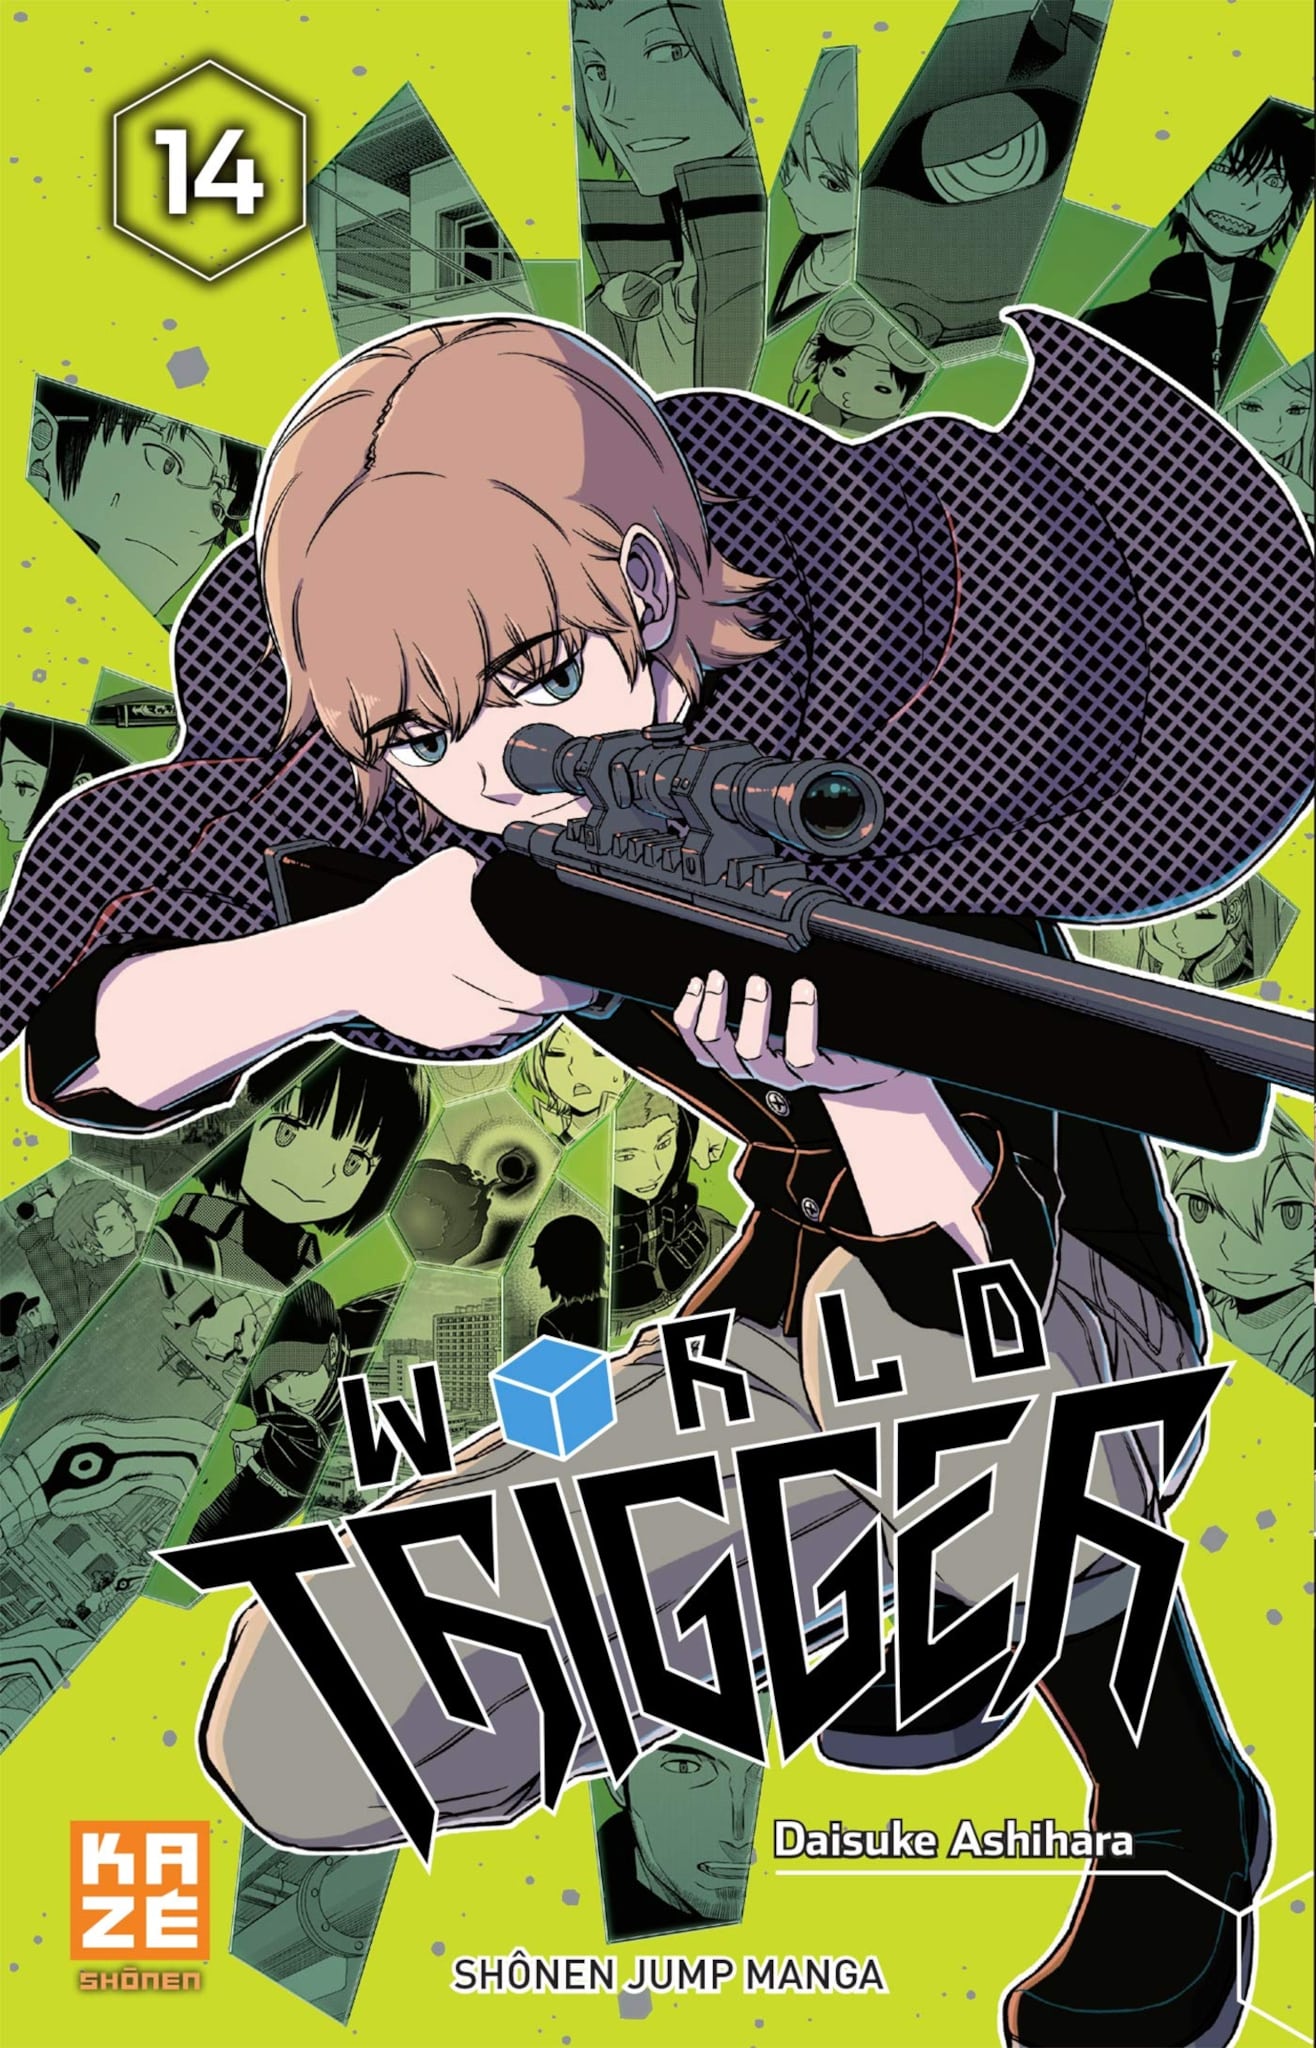 Tome 14 du manga World Trigger